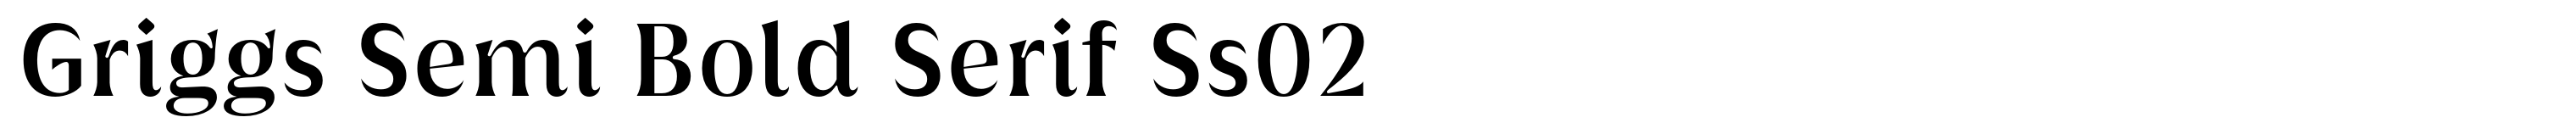 Griggs Semi Bold Serif Ss02